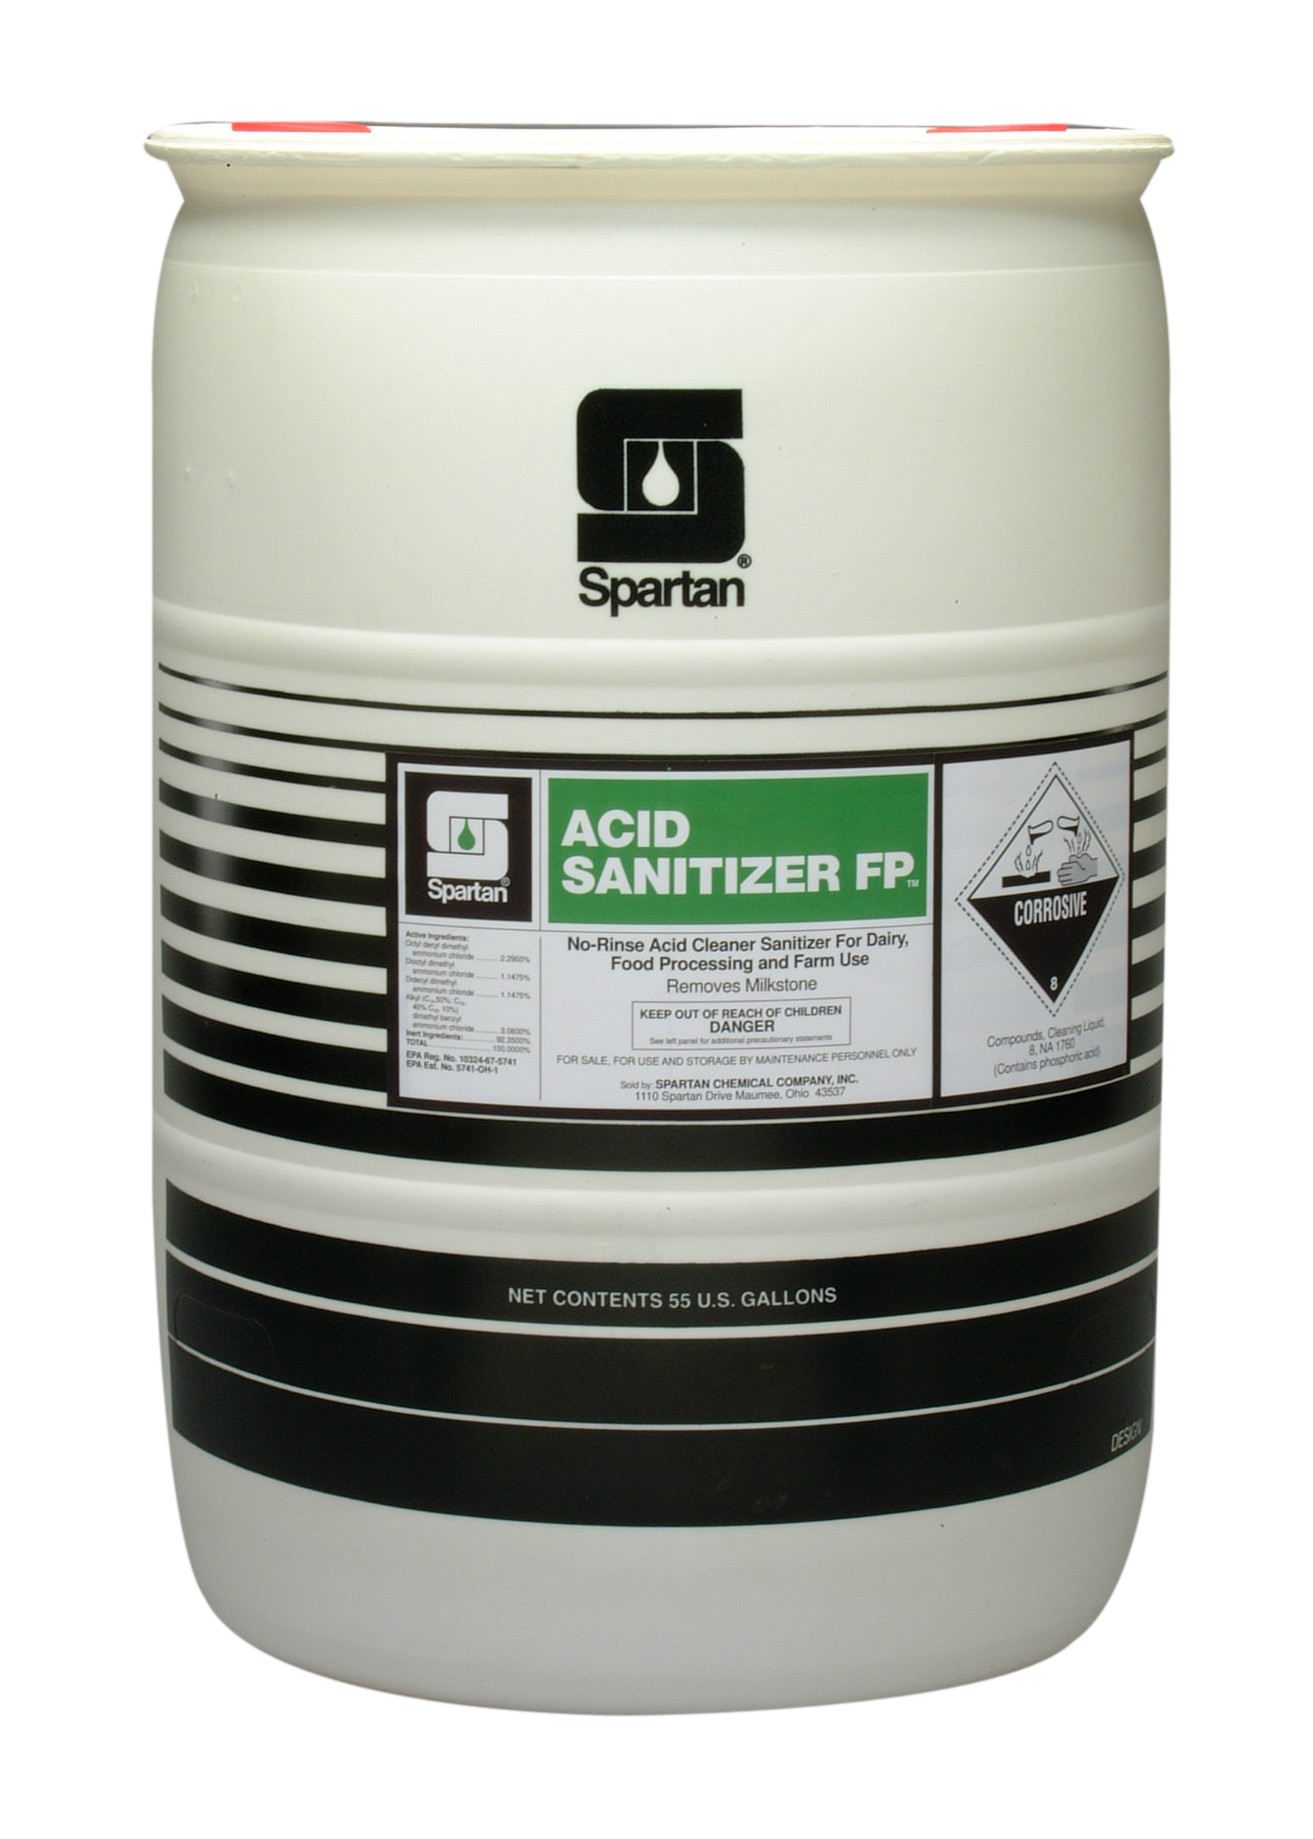 Spartan Chemical Company Acid Sanitizer FP, 55 GAL DRUM